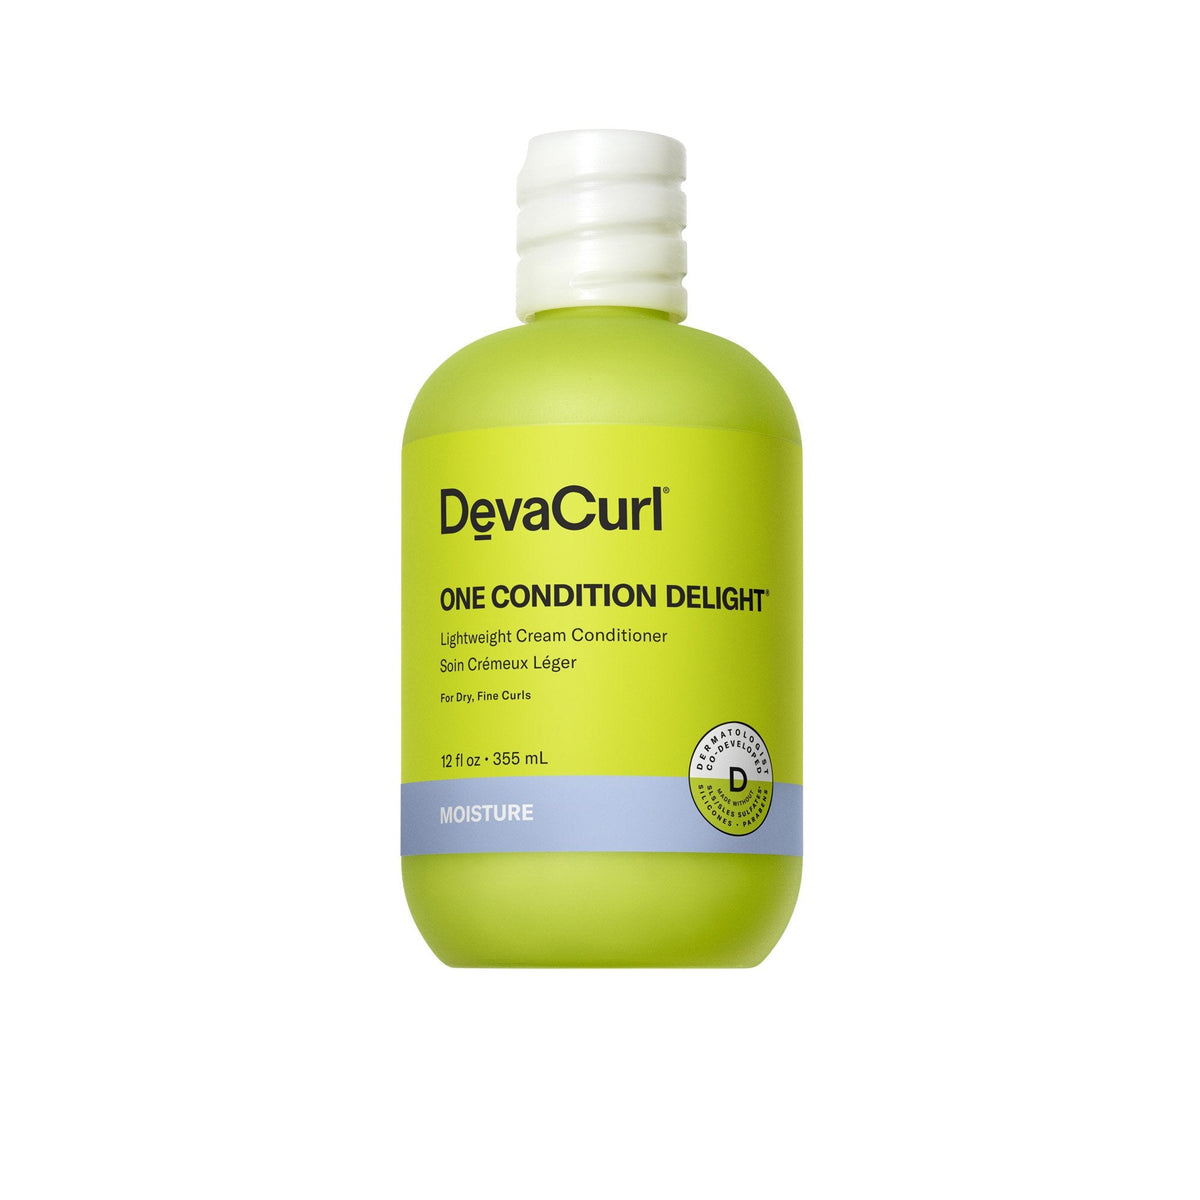 New! DevaCurl One Condition Delight - 12oz - by Deva Curl |ProCare Outlet|